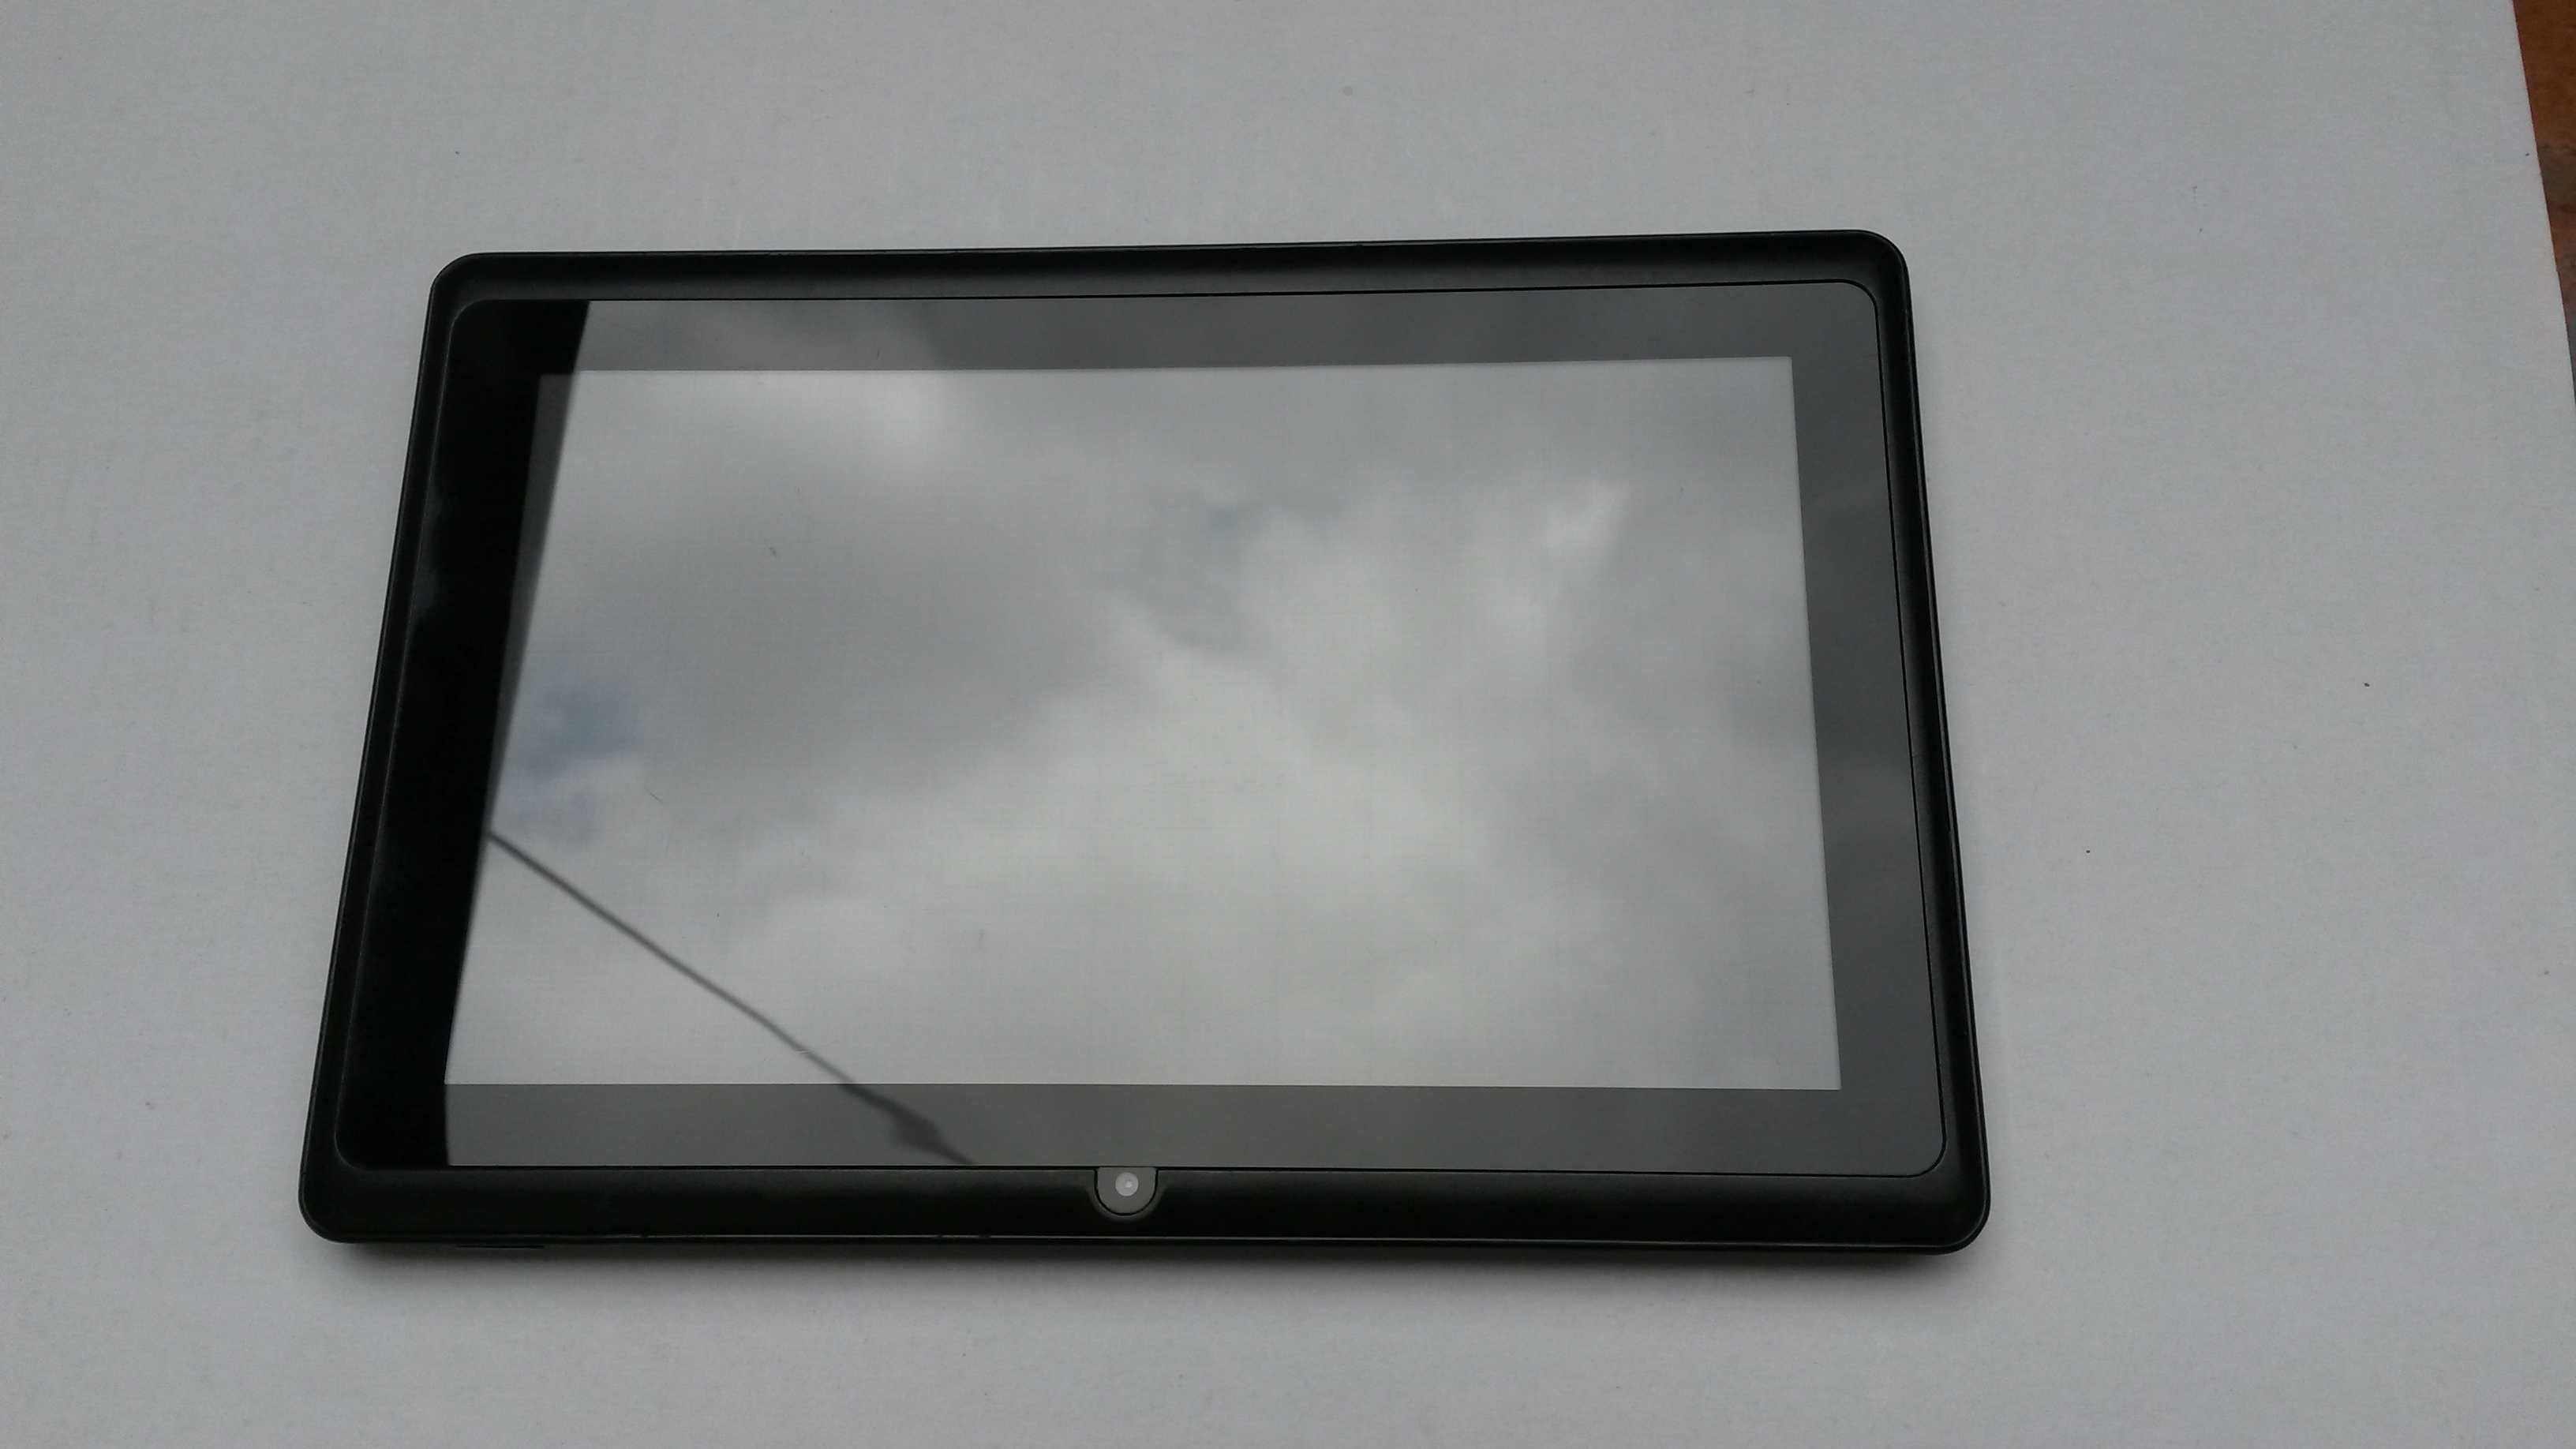 Tablet OVERMAX OV-TB-08 II Android ekran 7 cali używany sprawny